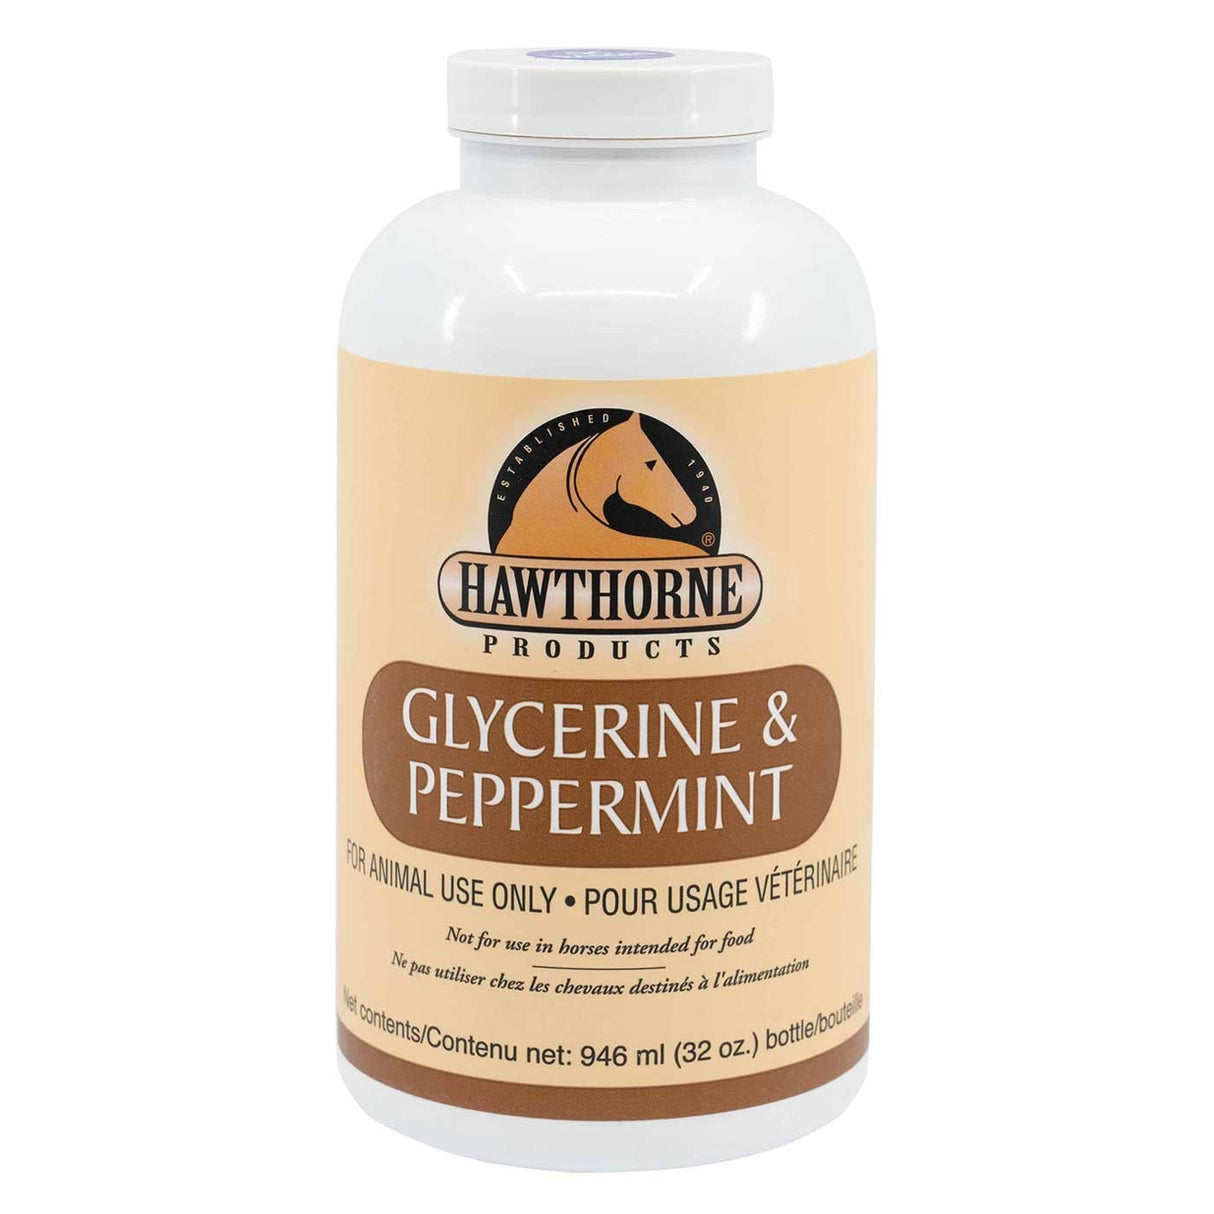 Hawthorne Glycerine & Peppermint Blend 32 oz.